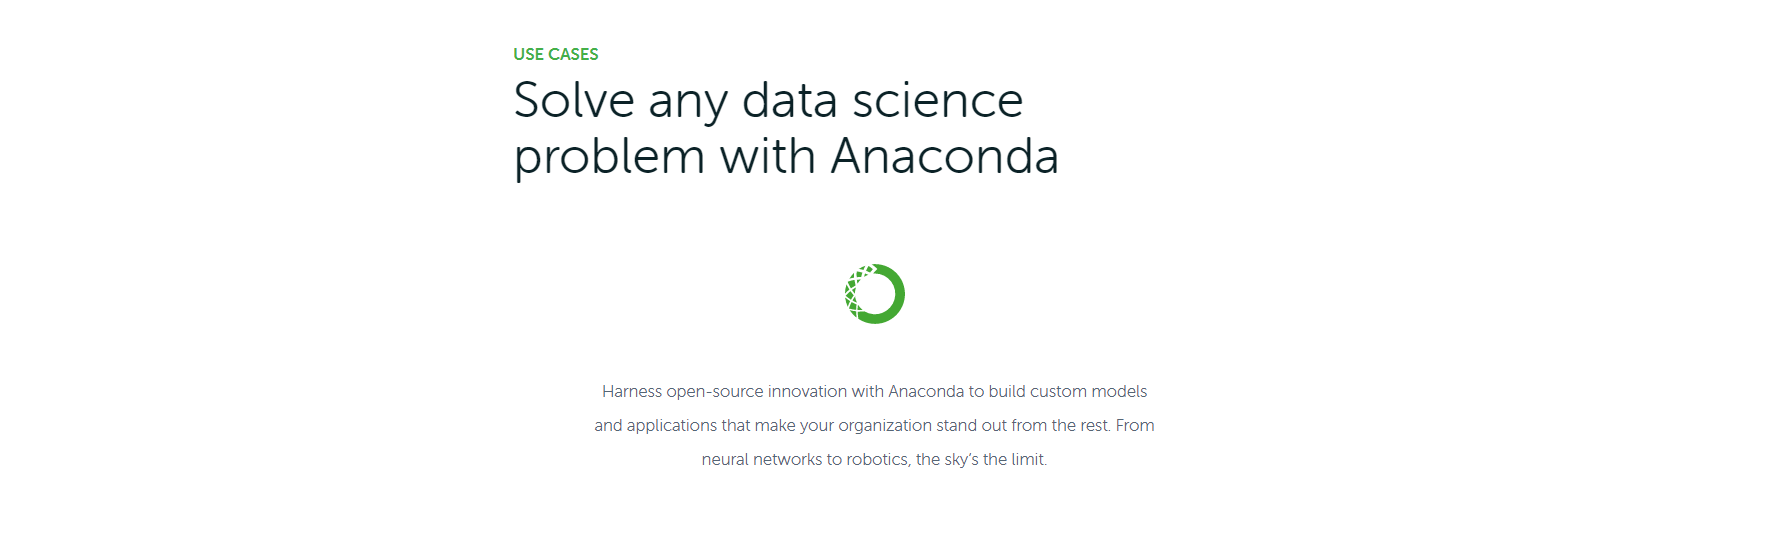 Anaconda Use Cases